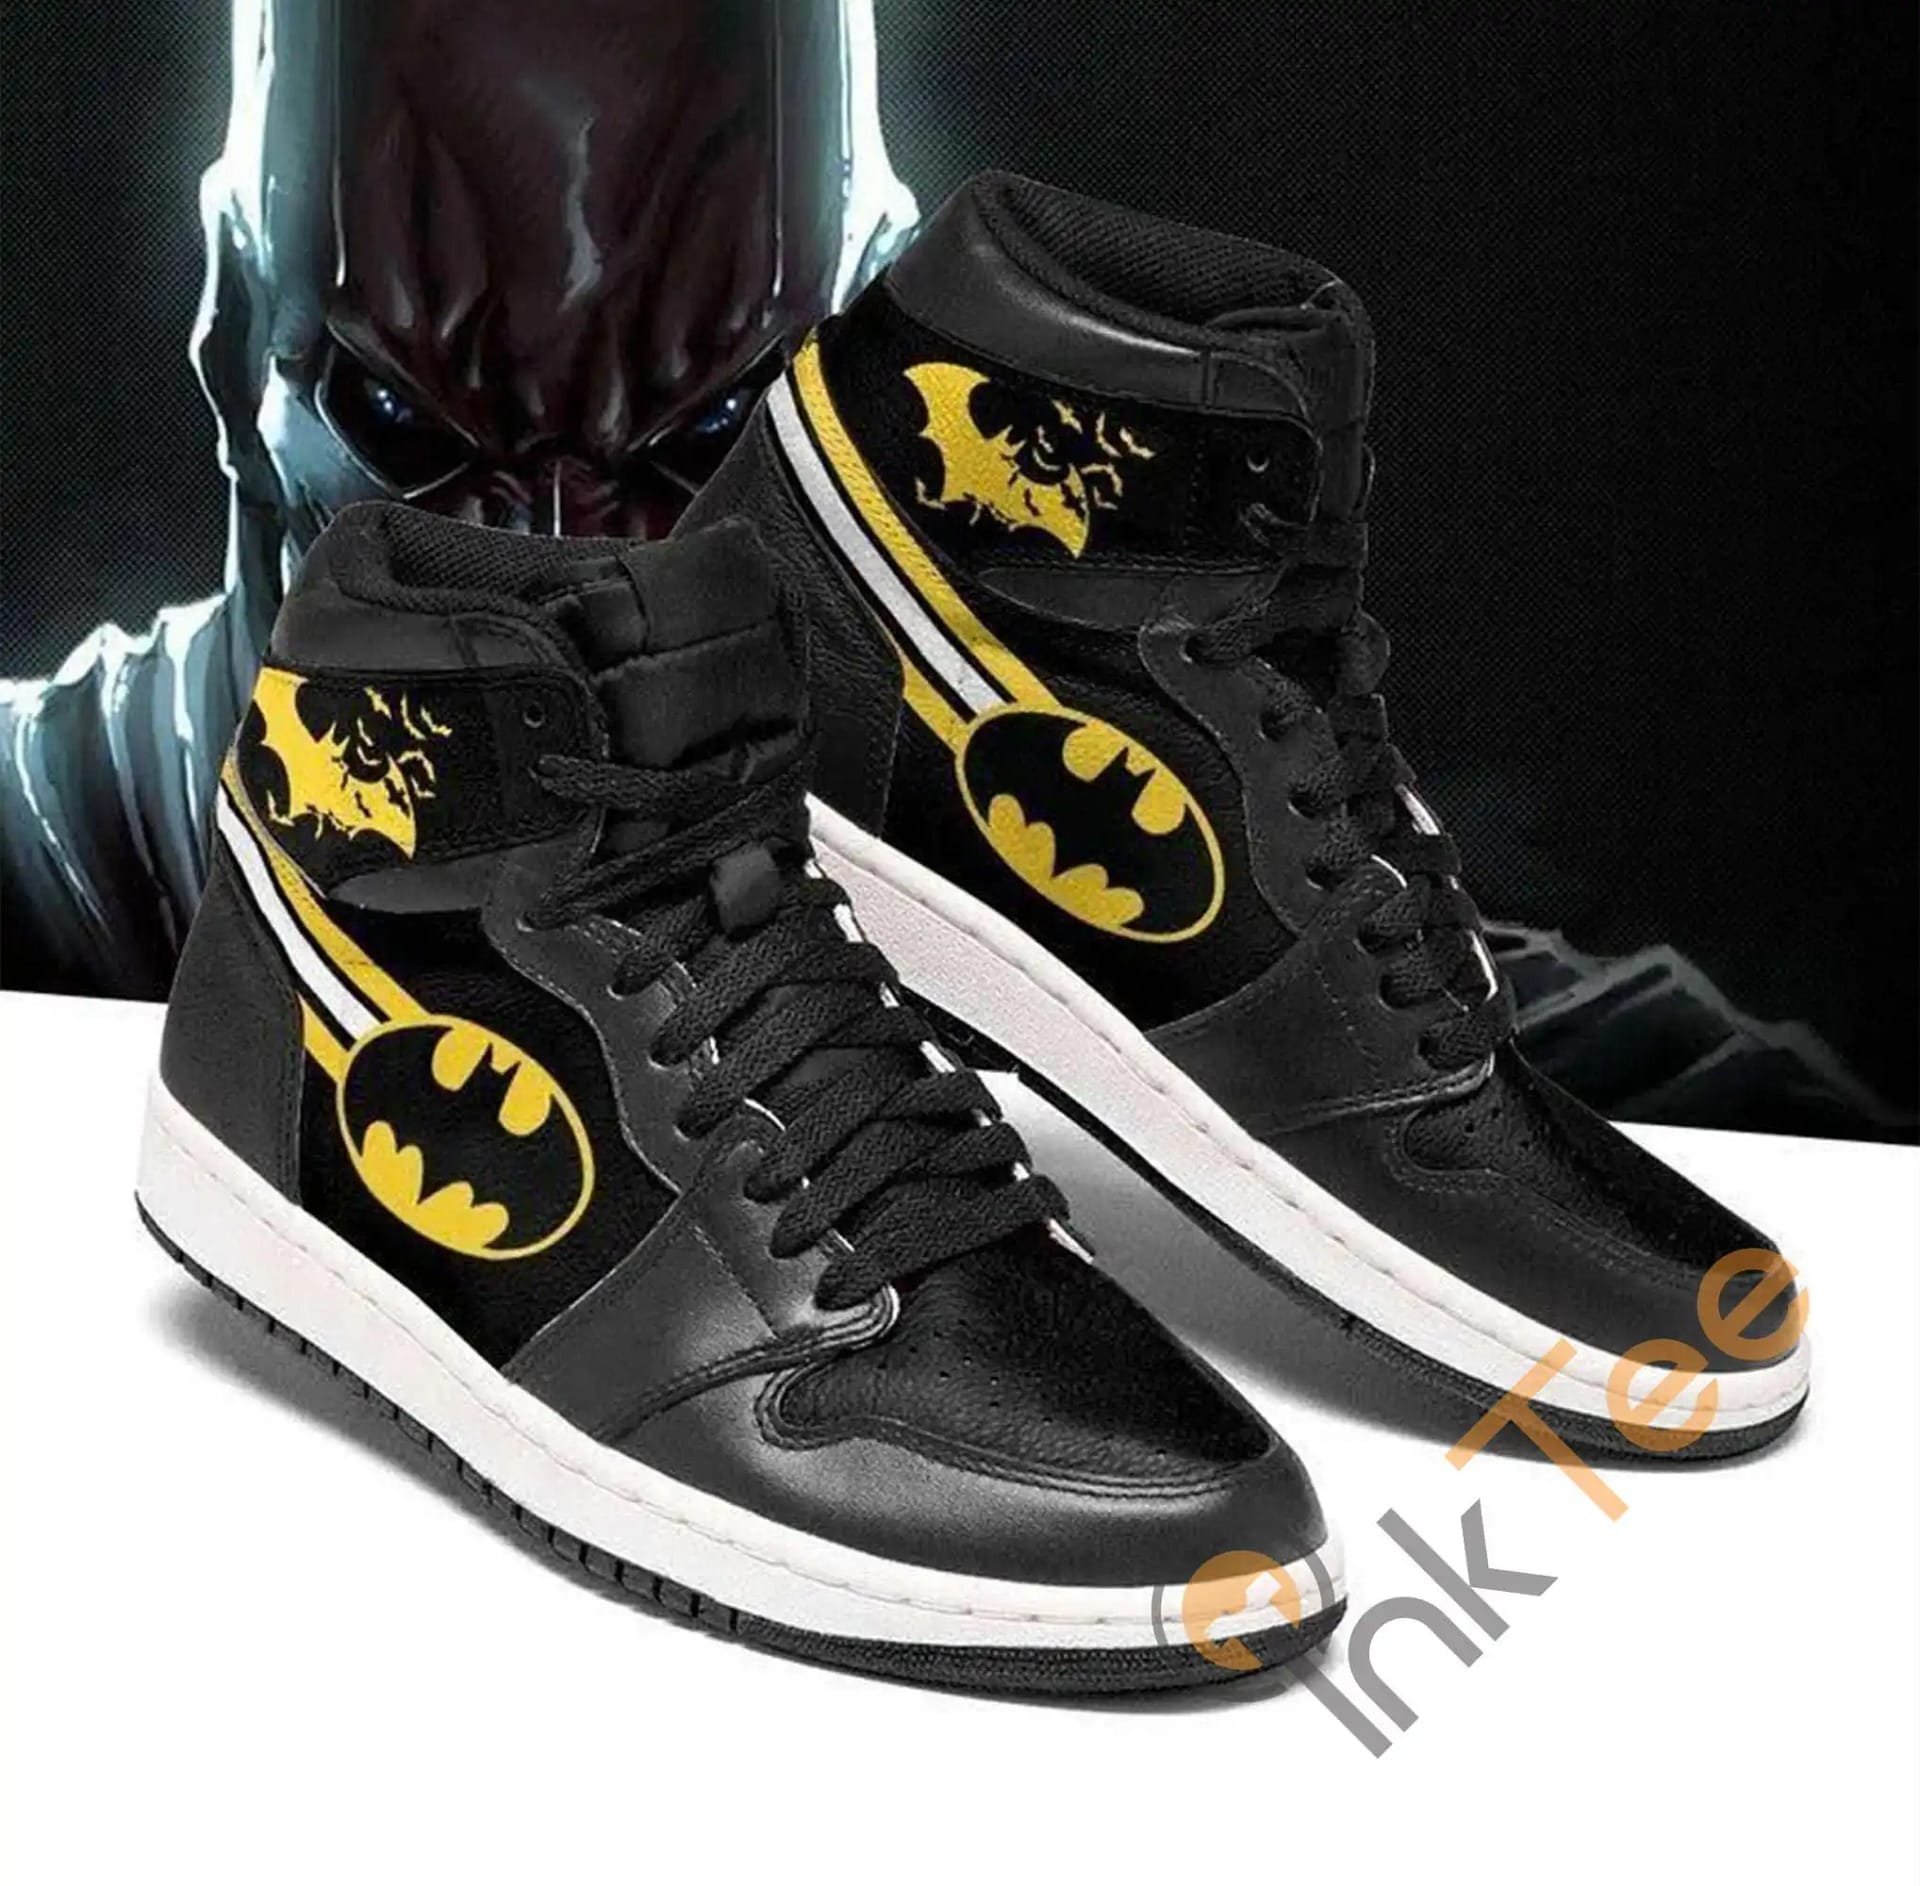 Batman Vs Superman JD Sneakers Comic Style | GEARSNKRS